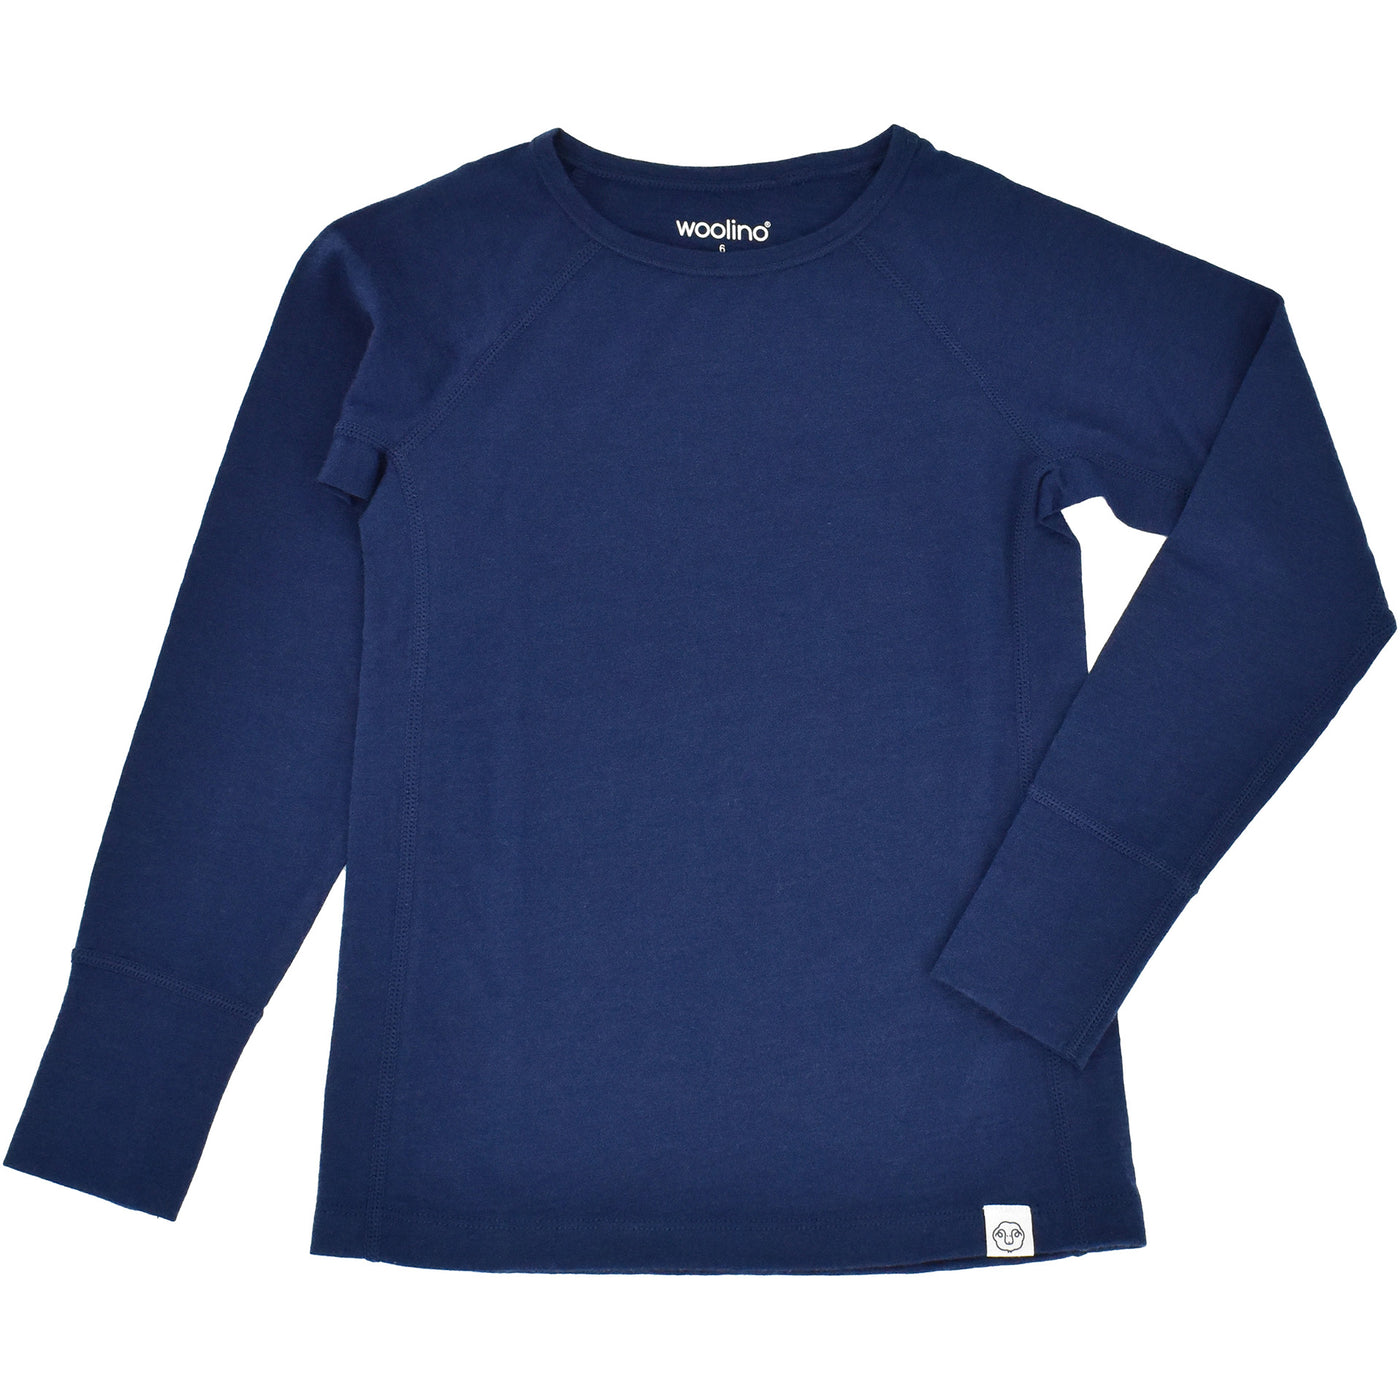 Kids Merino Wool Base Layer, Long Sleeve Top, Deep Blue